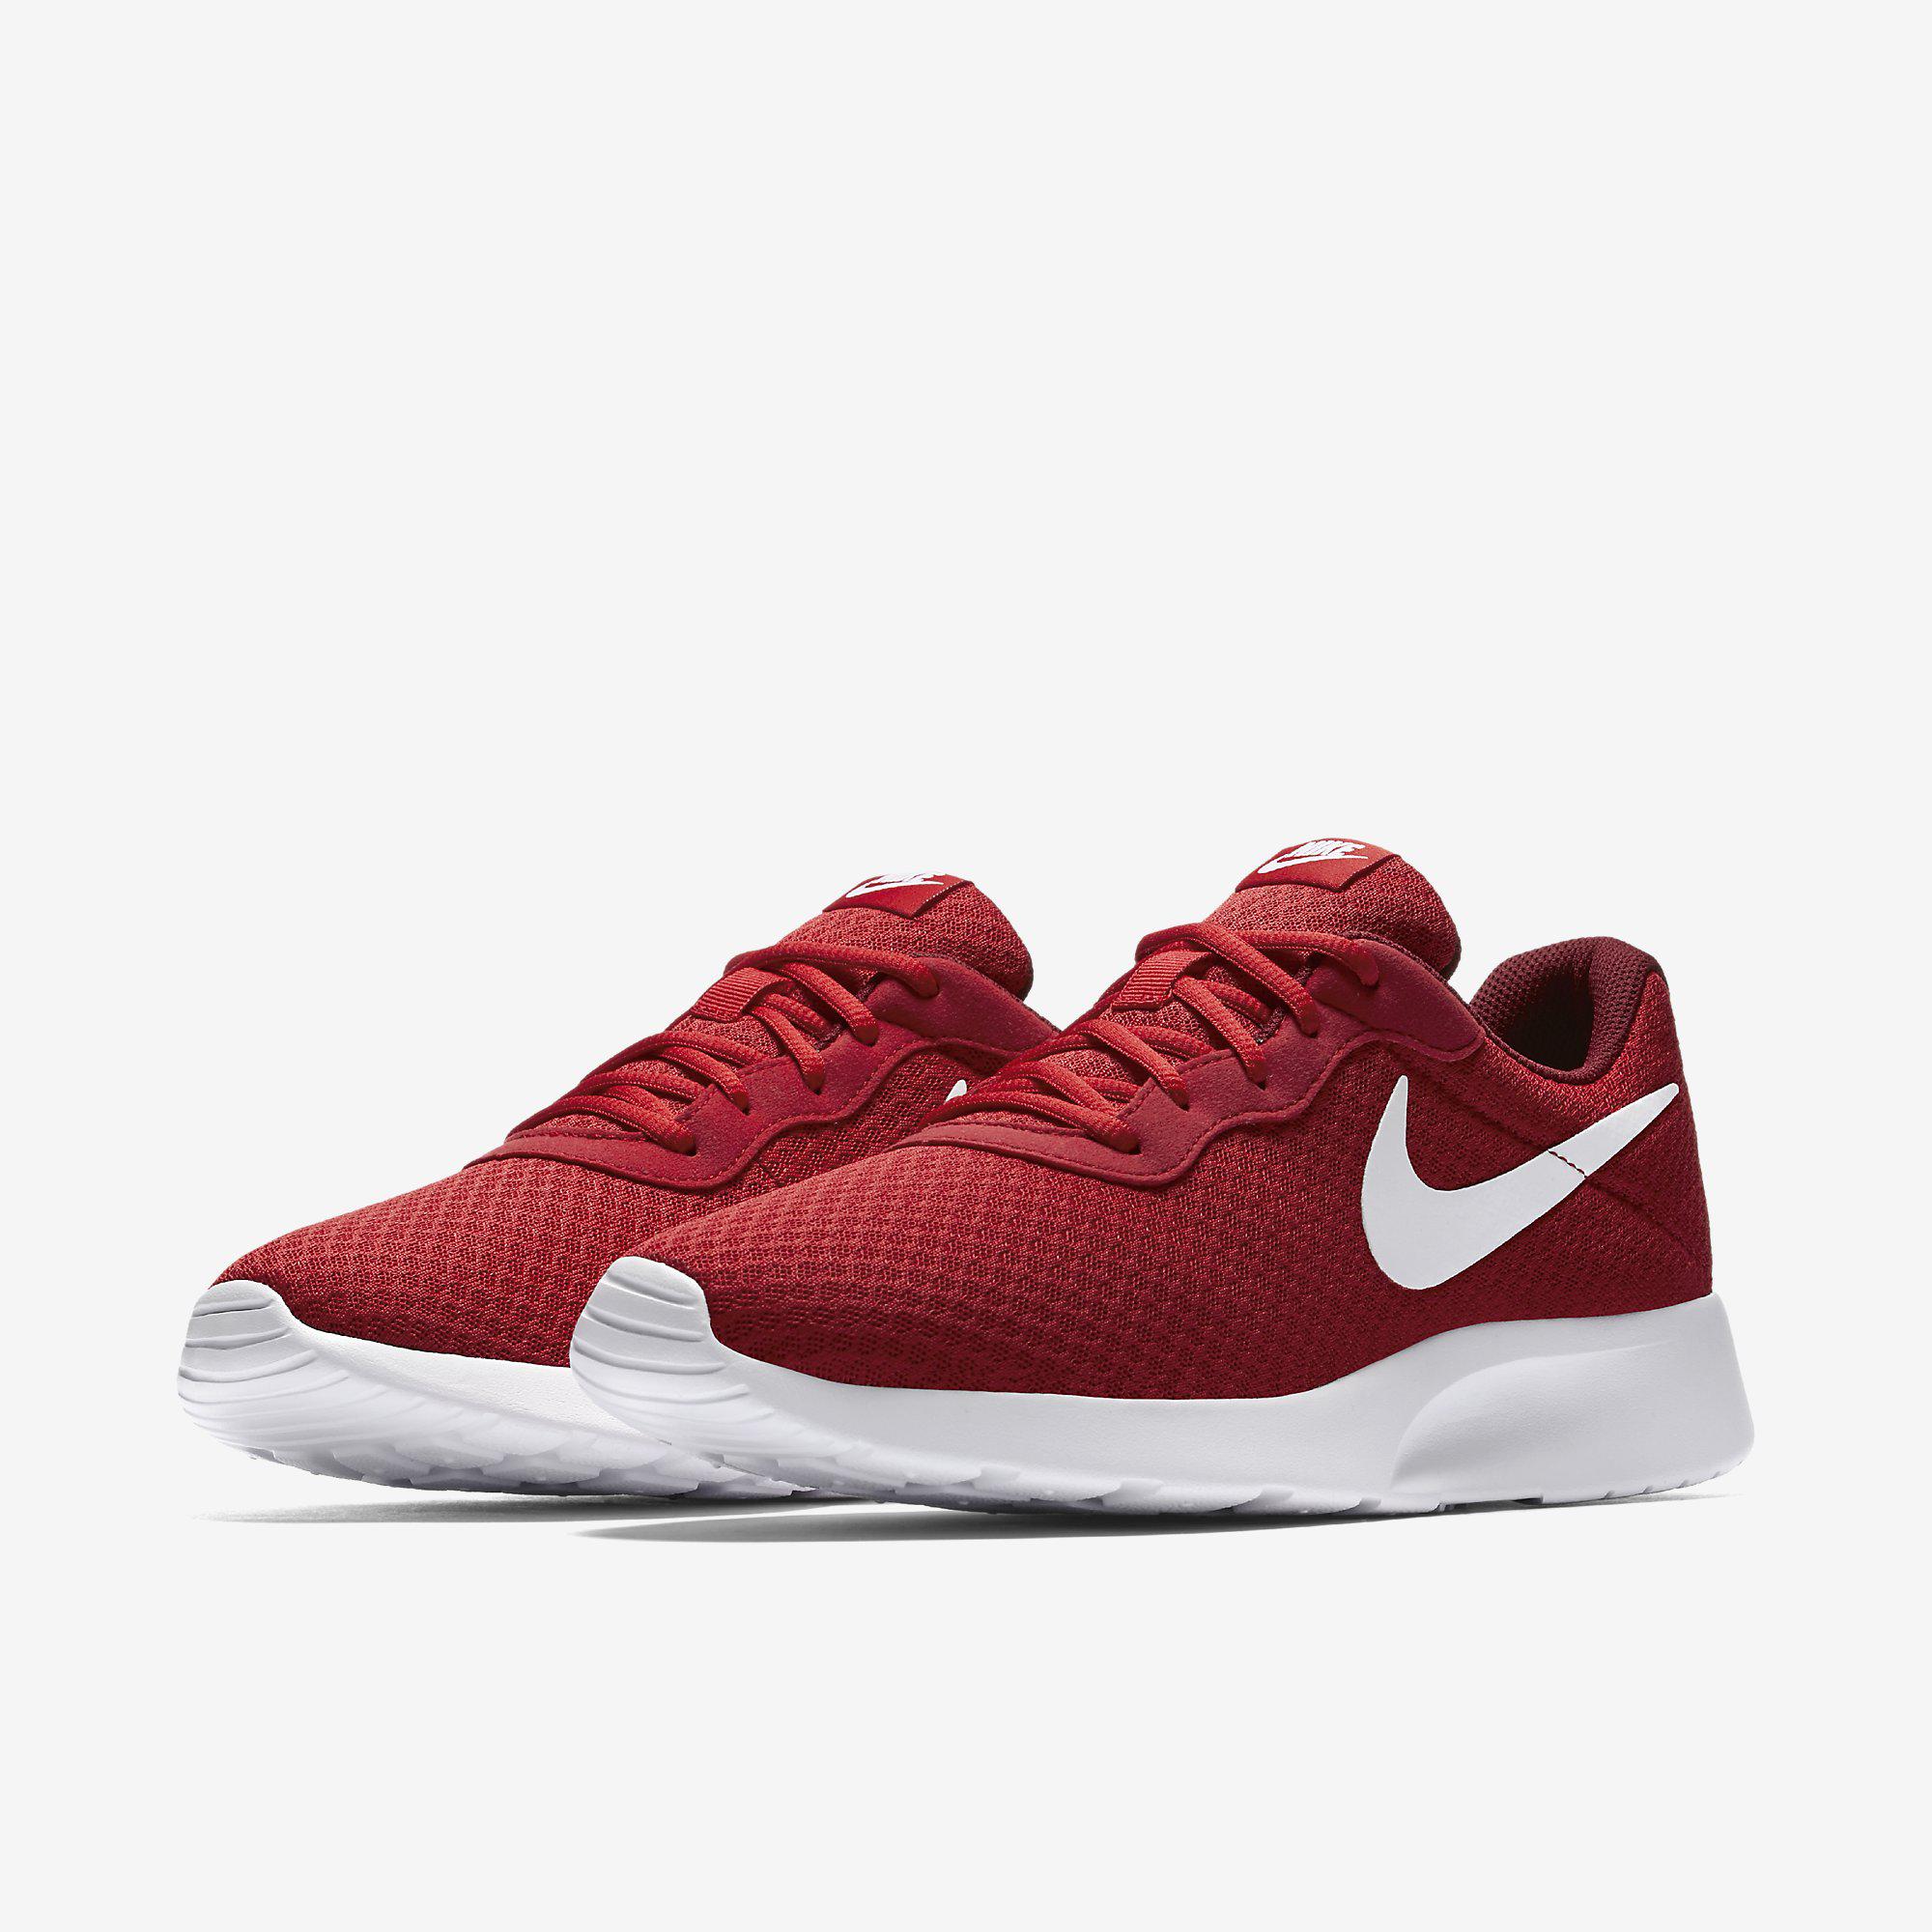 Nike Mens Tanjun Running Shoes - University Red/White - Tennisnuts.com